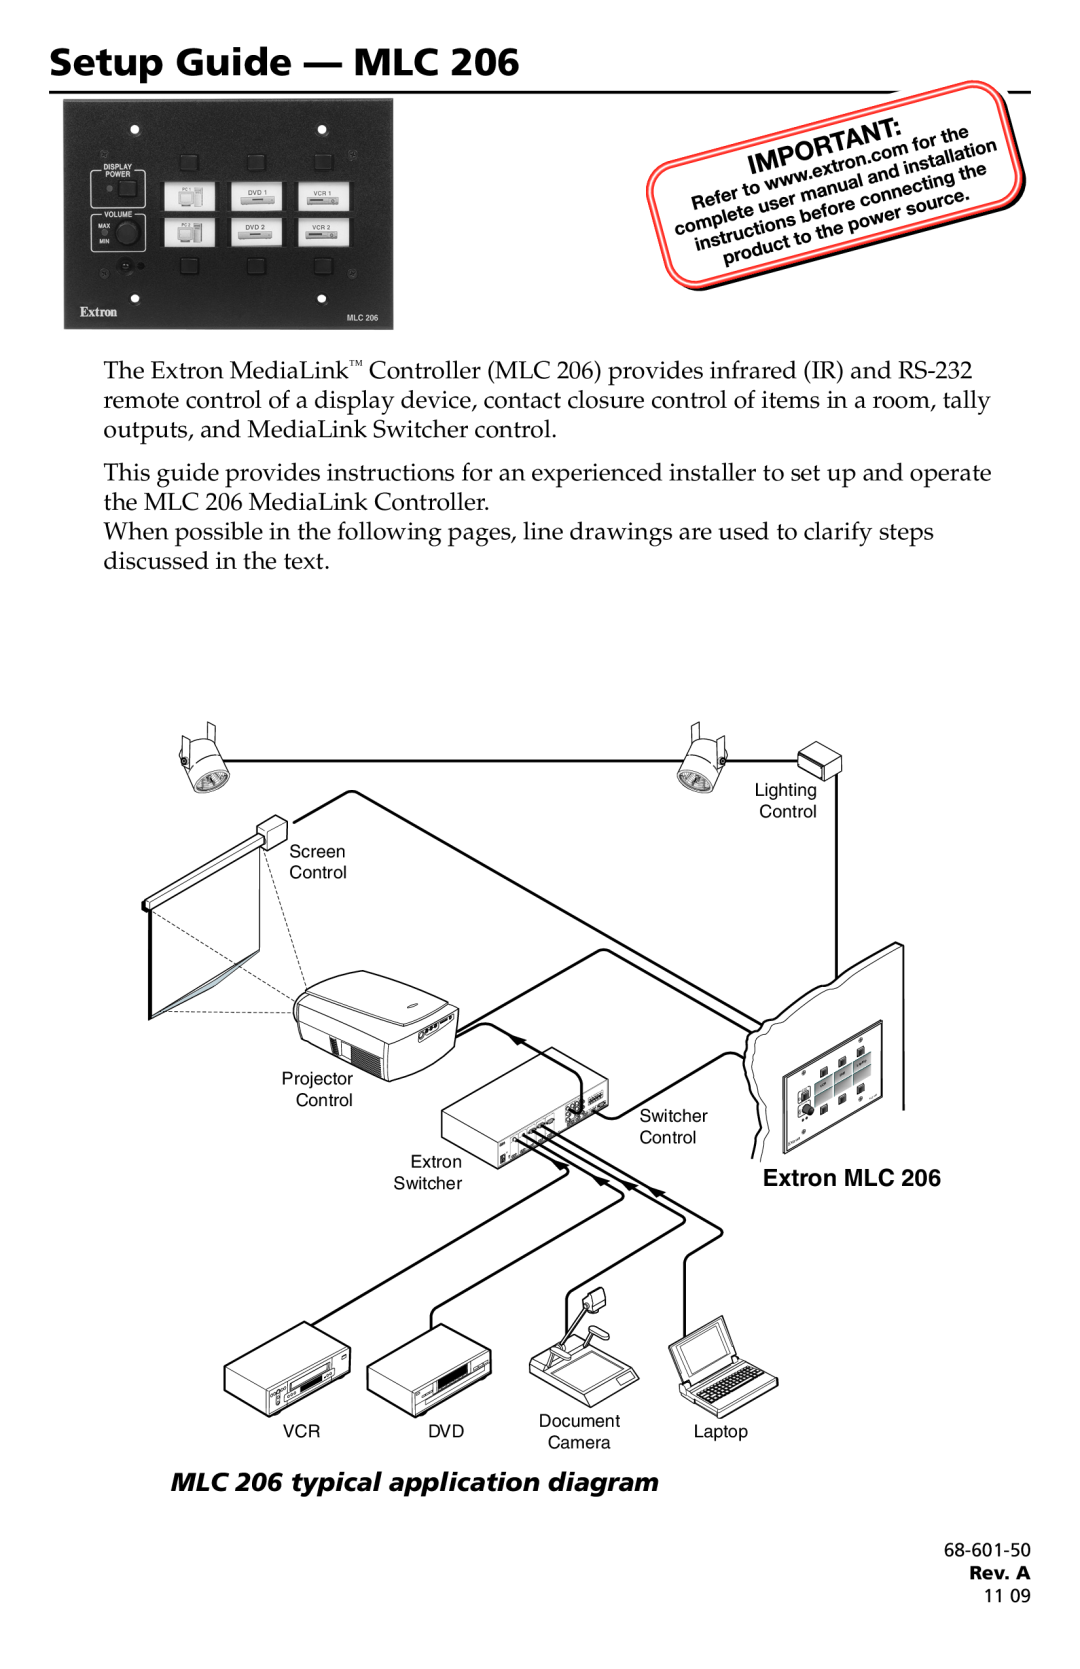 Extron electronic setup guide Extron MLC, Setup Guide -­MLC, MLC 206 typical application diagram 